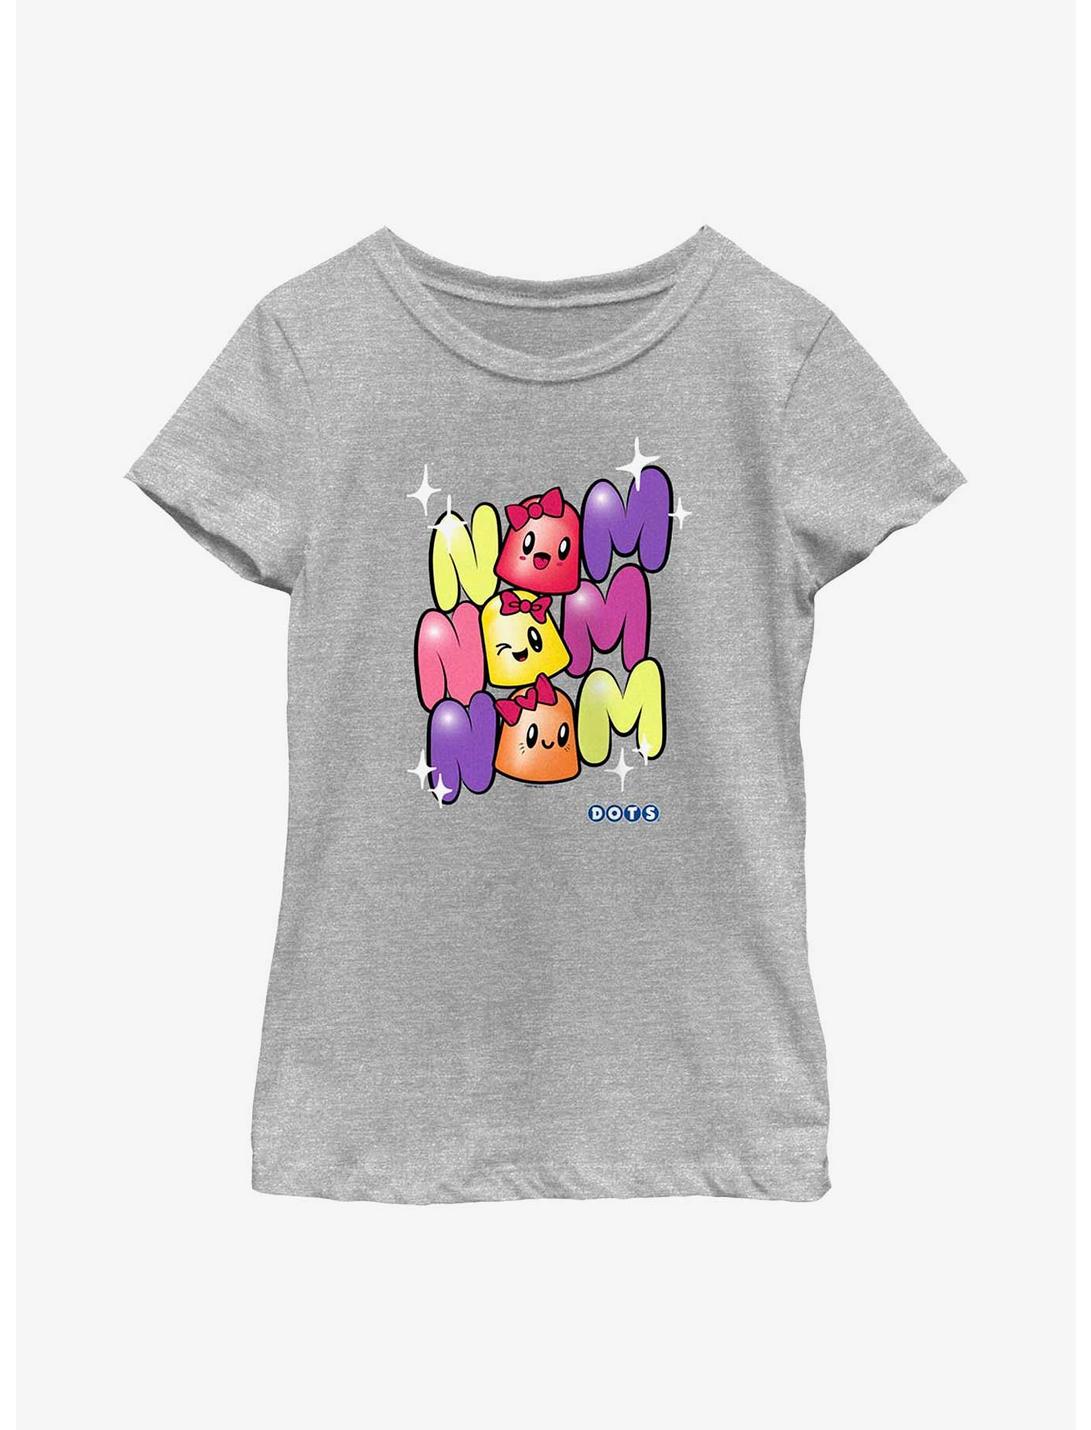 Tootsie Roll Dots Nom Nom Nom Youth Girls T-Shirt, ATH HTR, hi-res